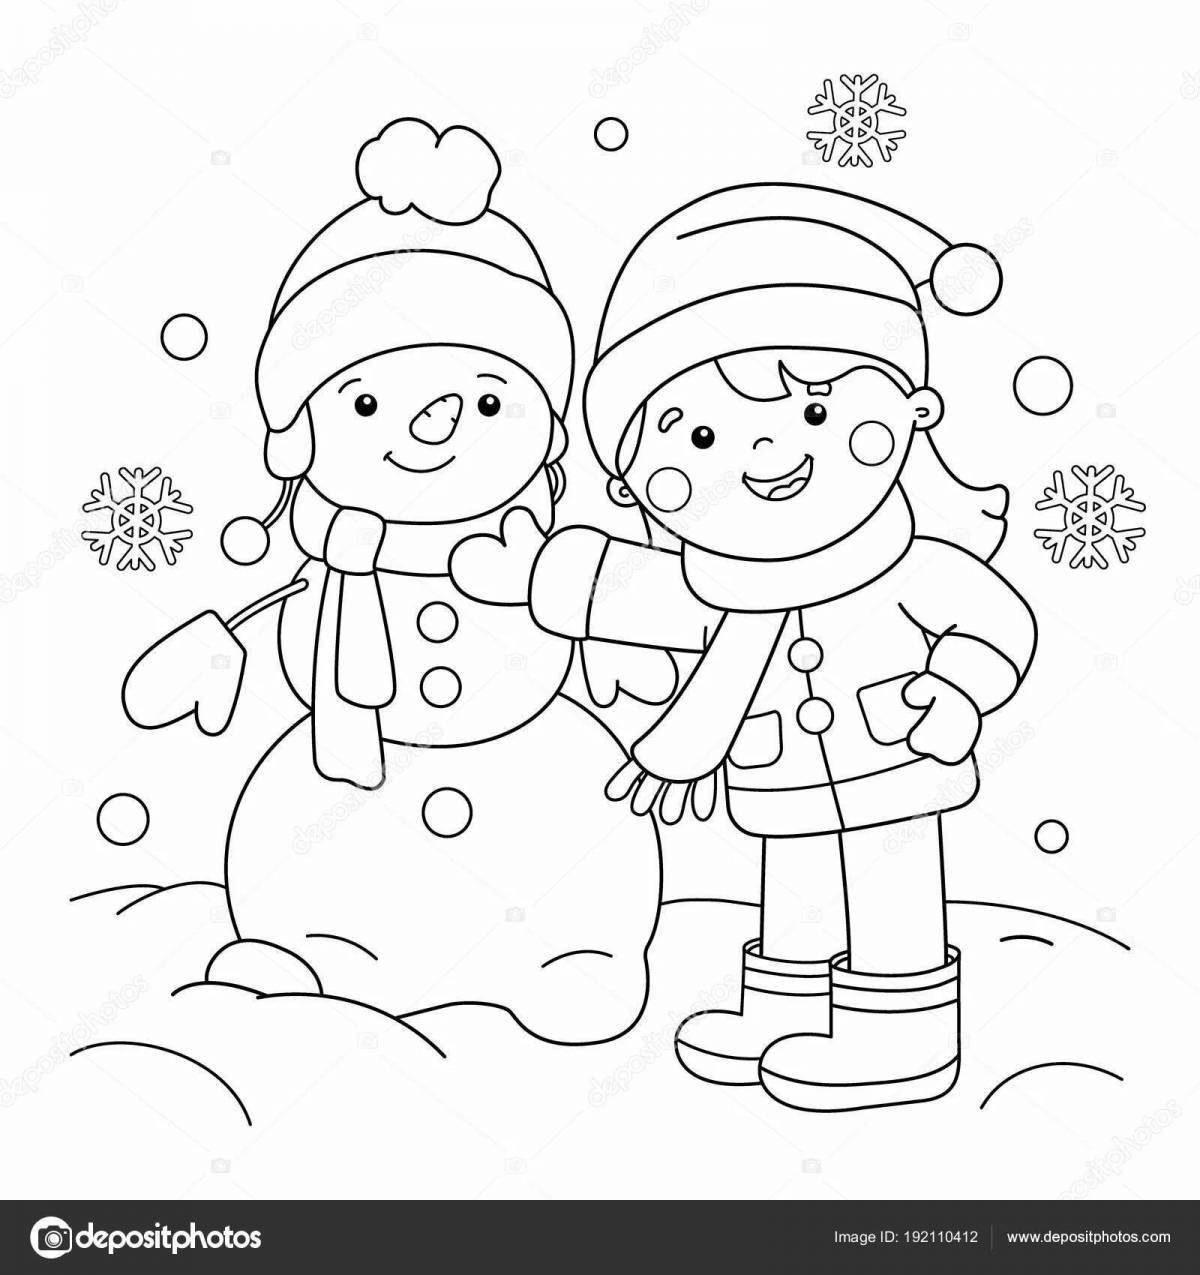 Fairytale coloring book winter fun for children 3-4 years old in kindergarten